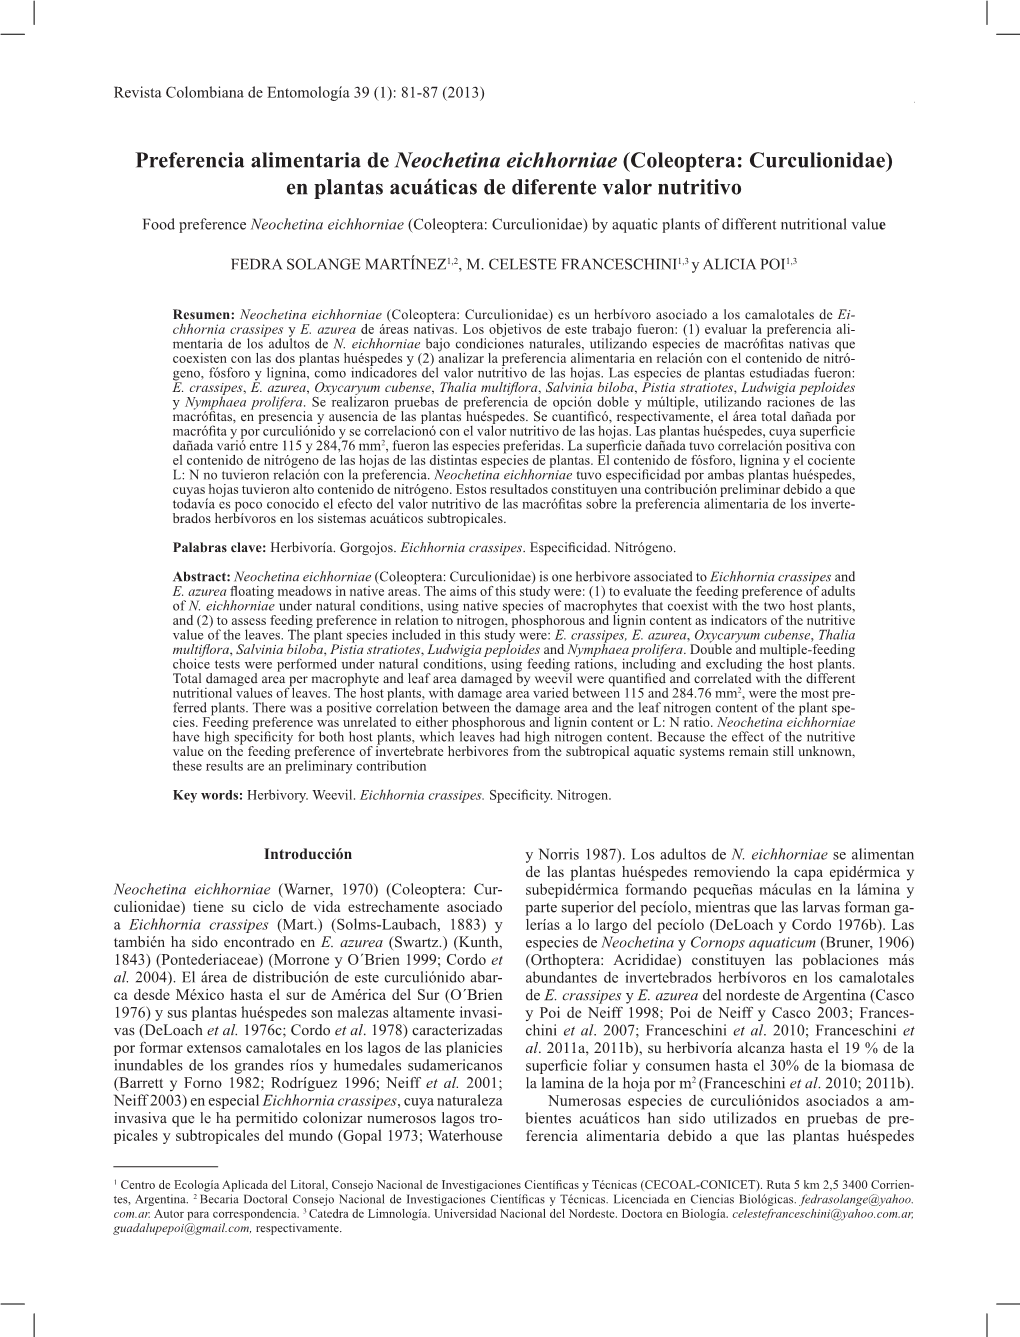 Preferencia Alimentaria De Neochetina Eichhorniae (Coleoptera: Curculionidae) En Plantas Acuáticas De Diferente Valor Nutritivo